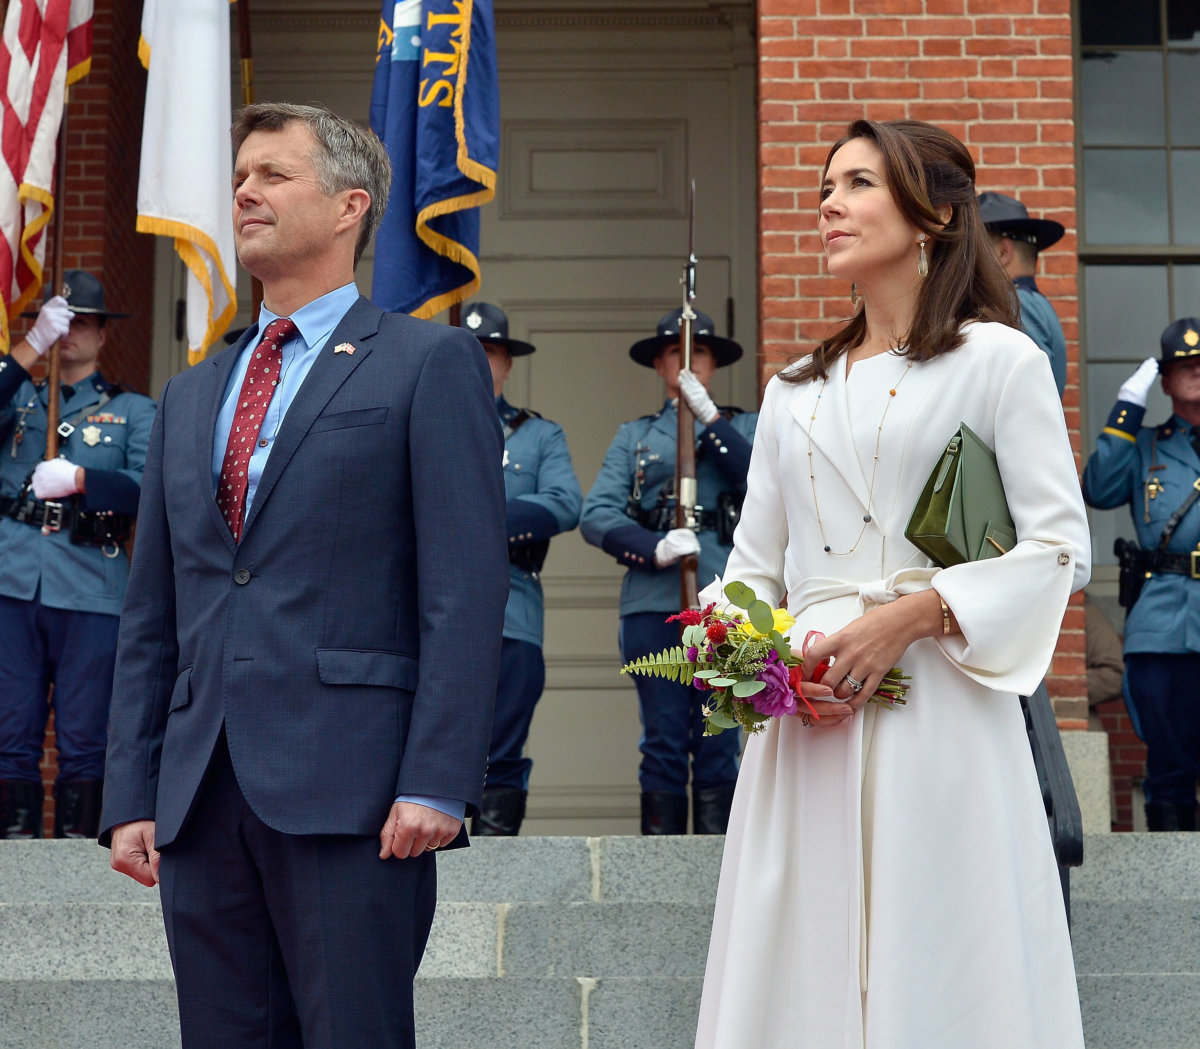 Prince and Princess of Denmark visit Boston